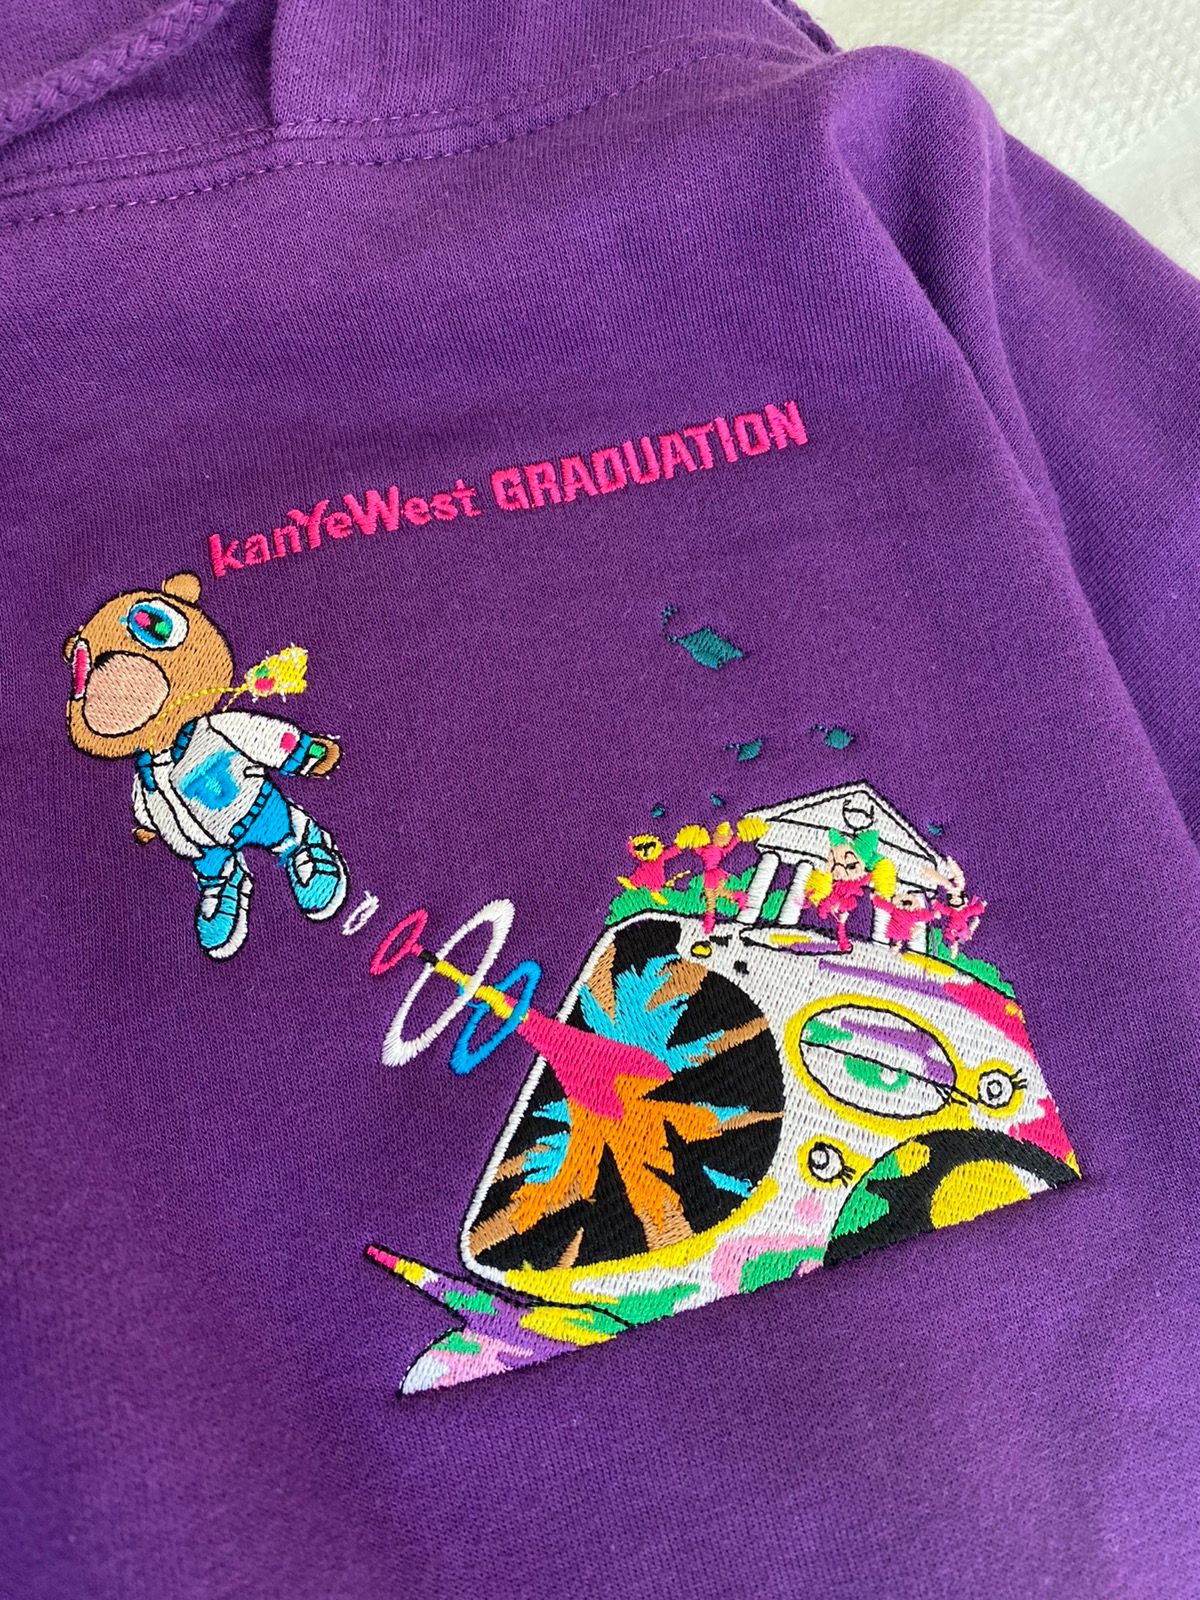 Kanye West Handmade Kanye west graduation embroidery hoodie | Grailed